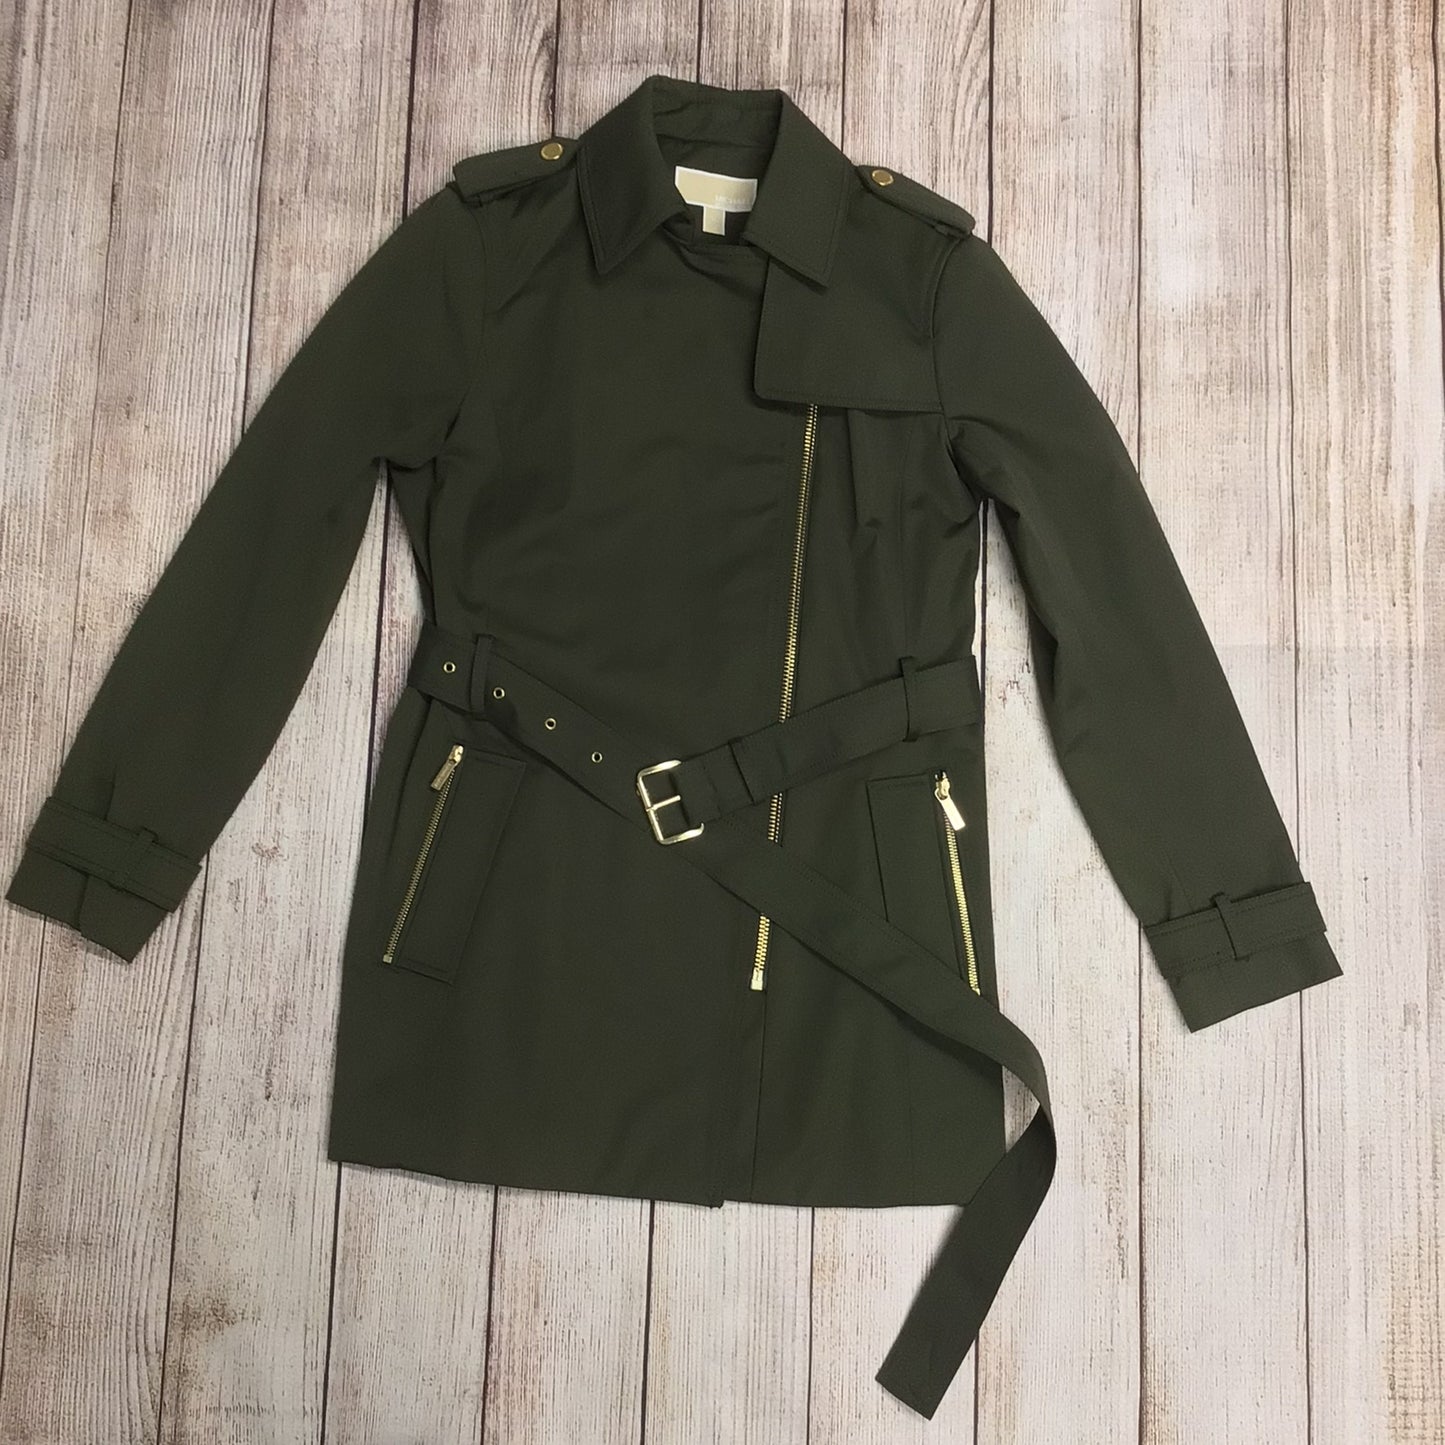 Michael Kors Green Mac Trench Coat w/Belt Size M